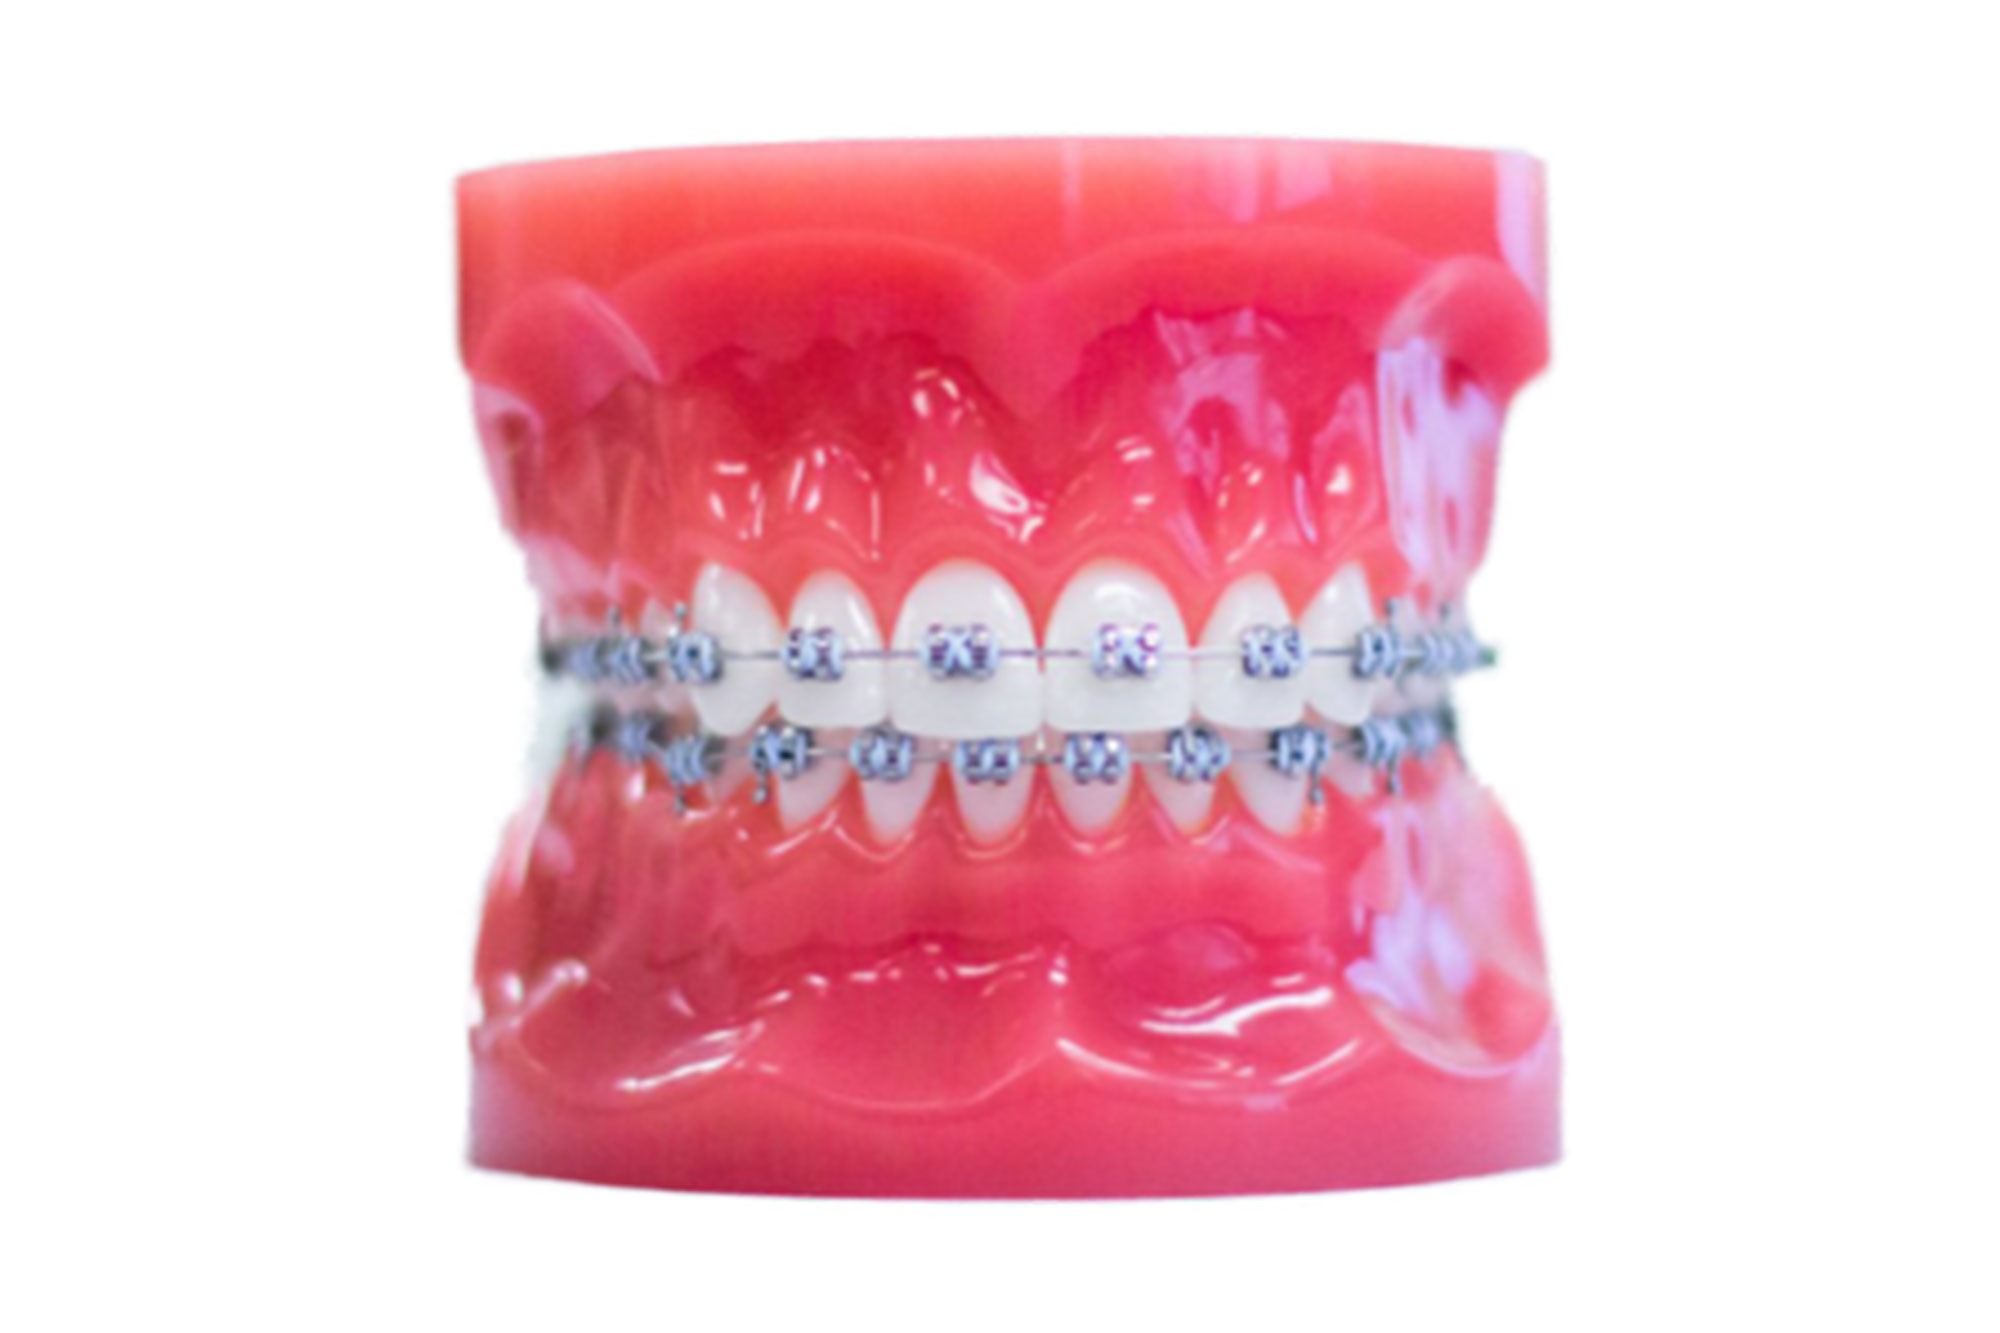 metal braces image